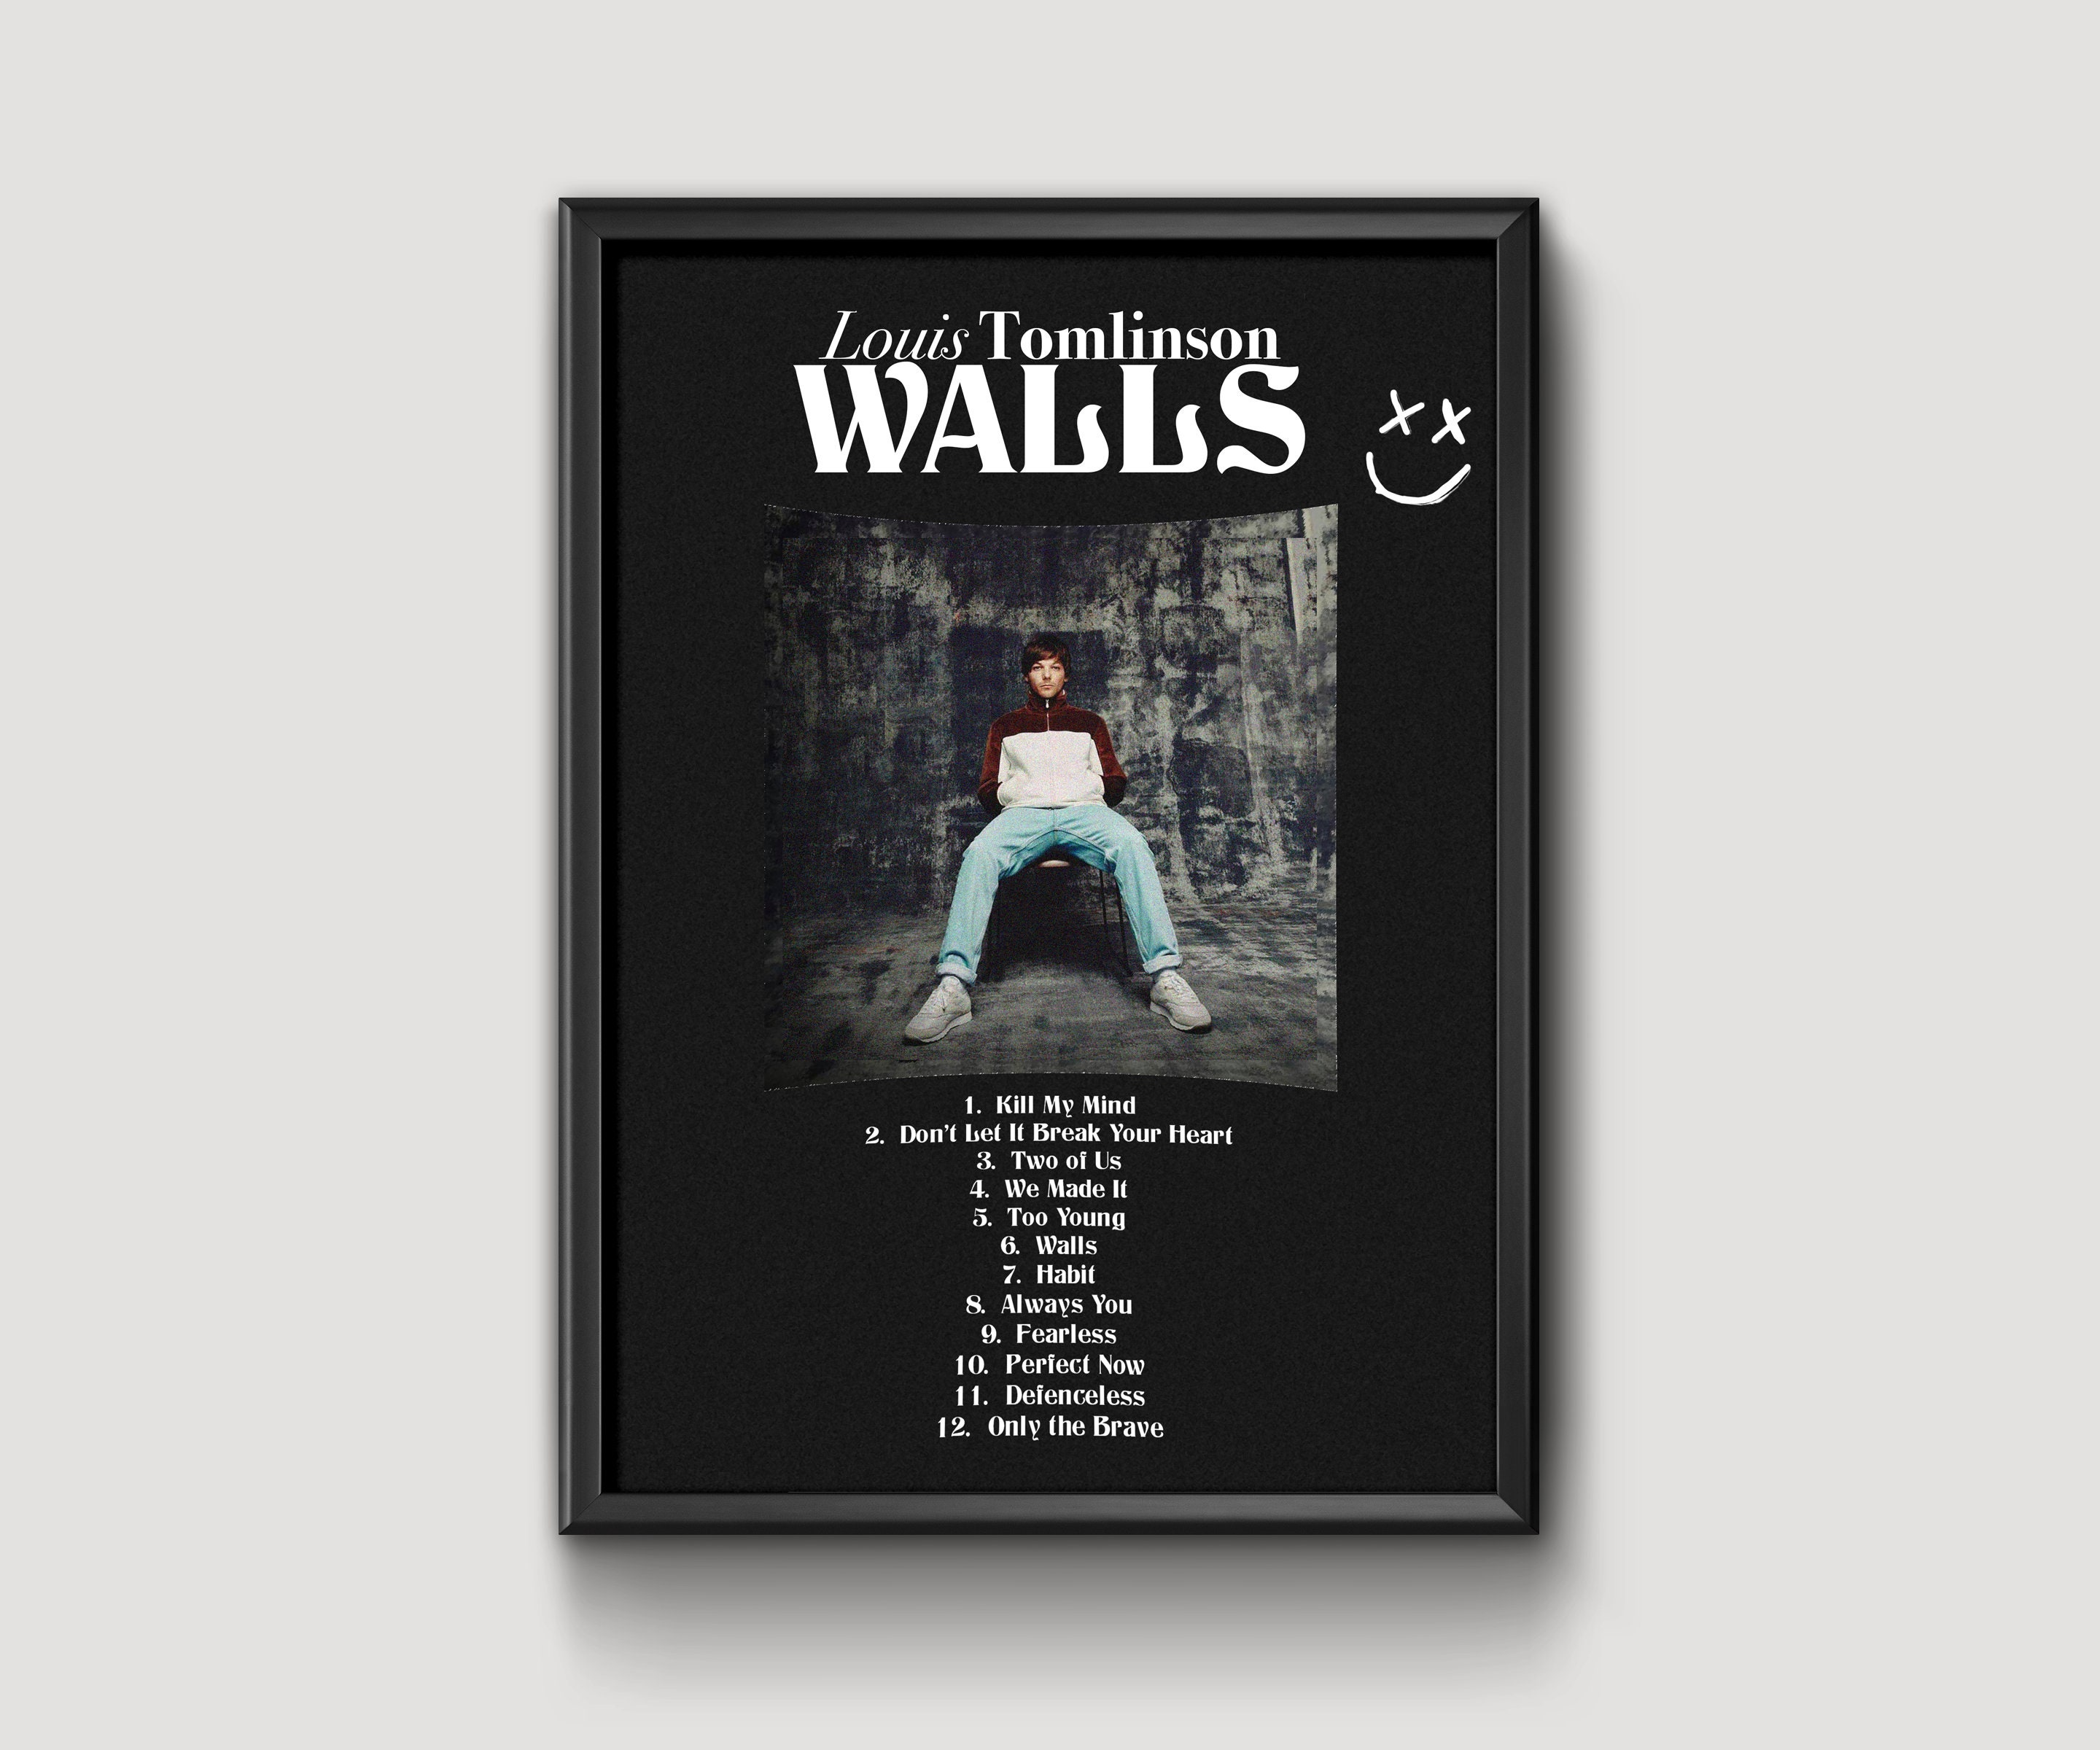 Louis Tomlinson - WALLS - Vinyl LP - NEW & SEALED!!